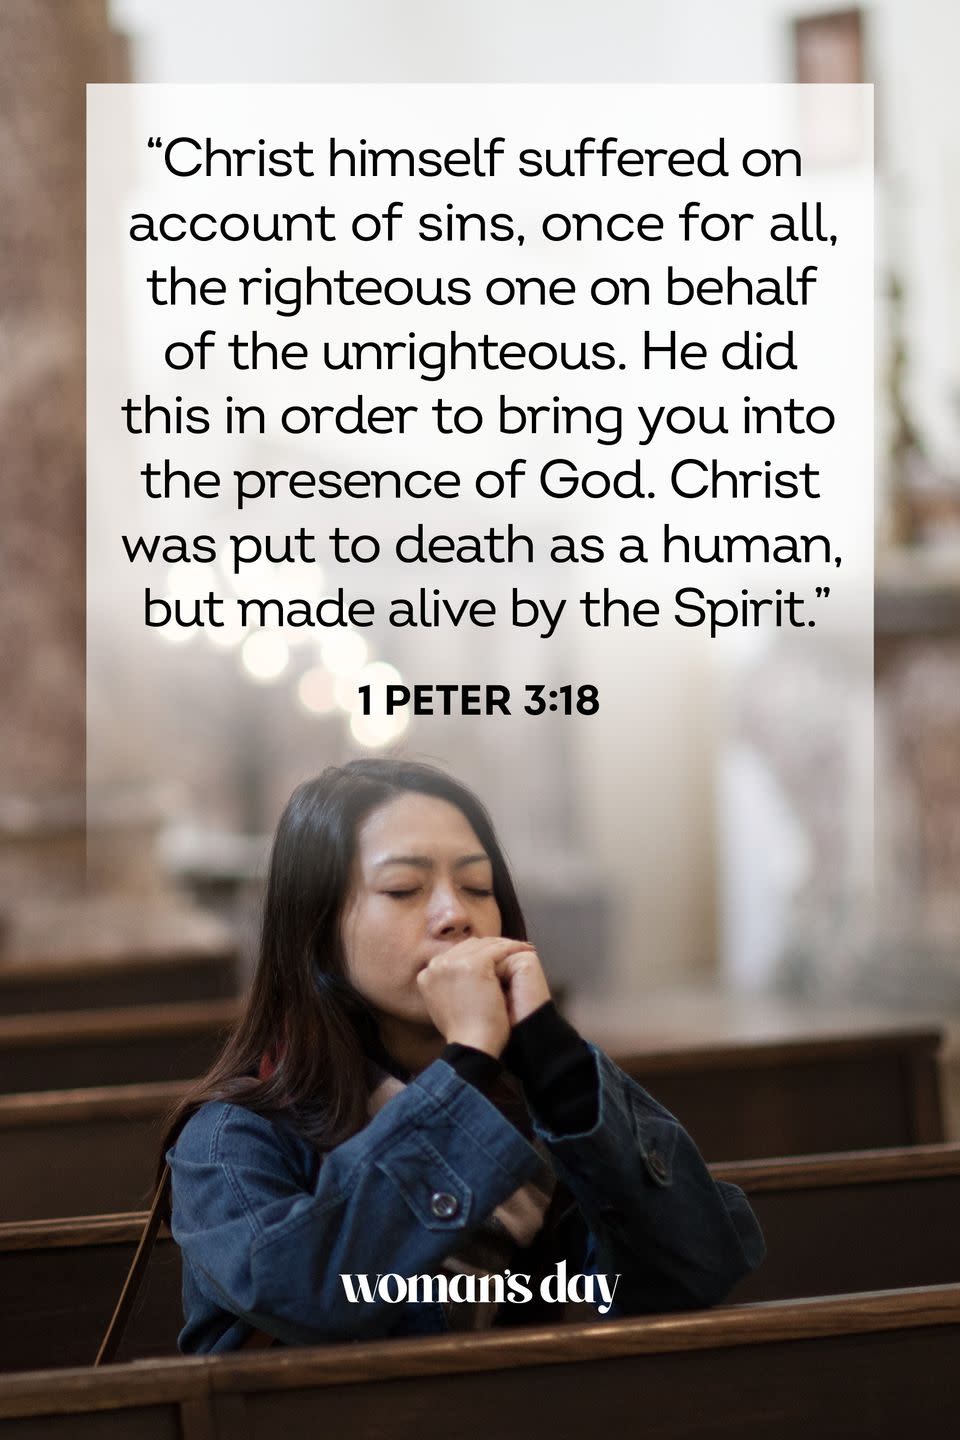 8) 1 Peter 3:18